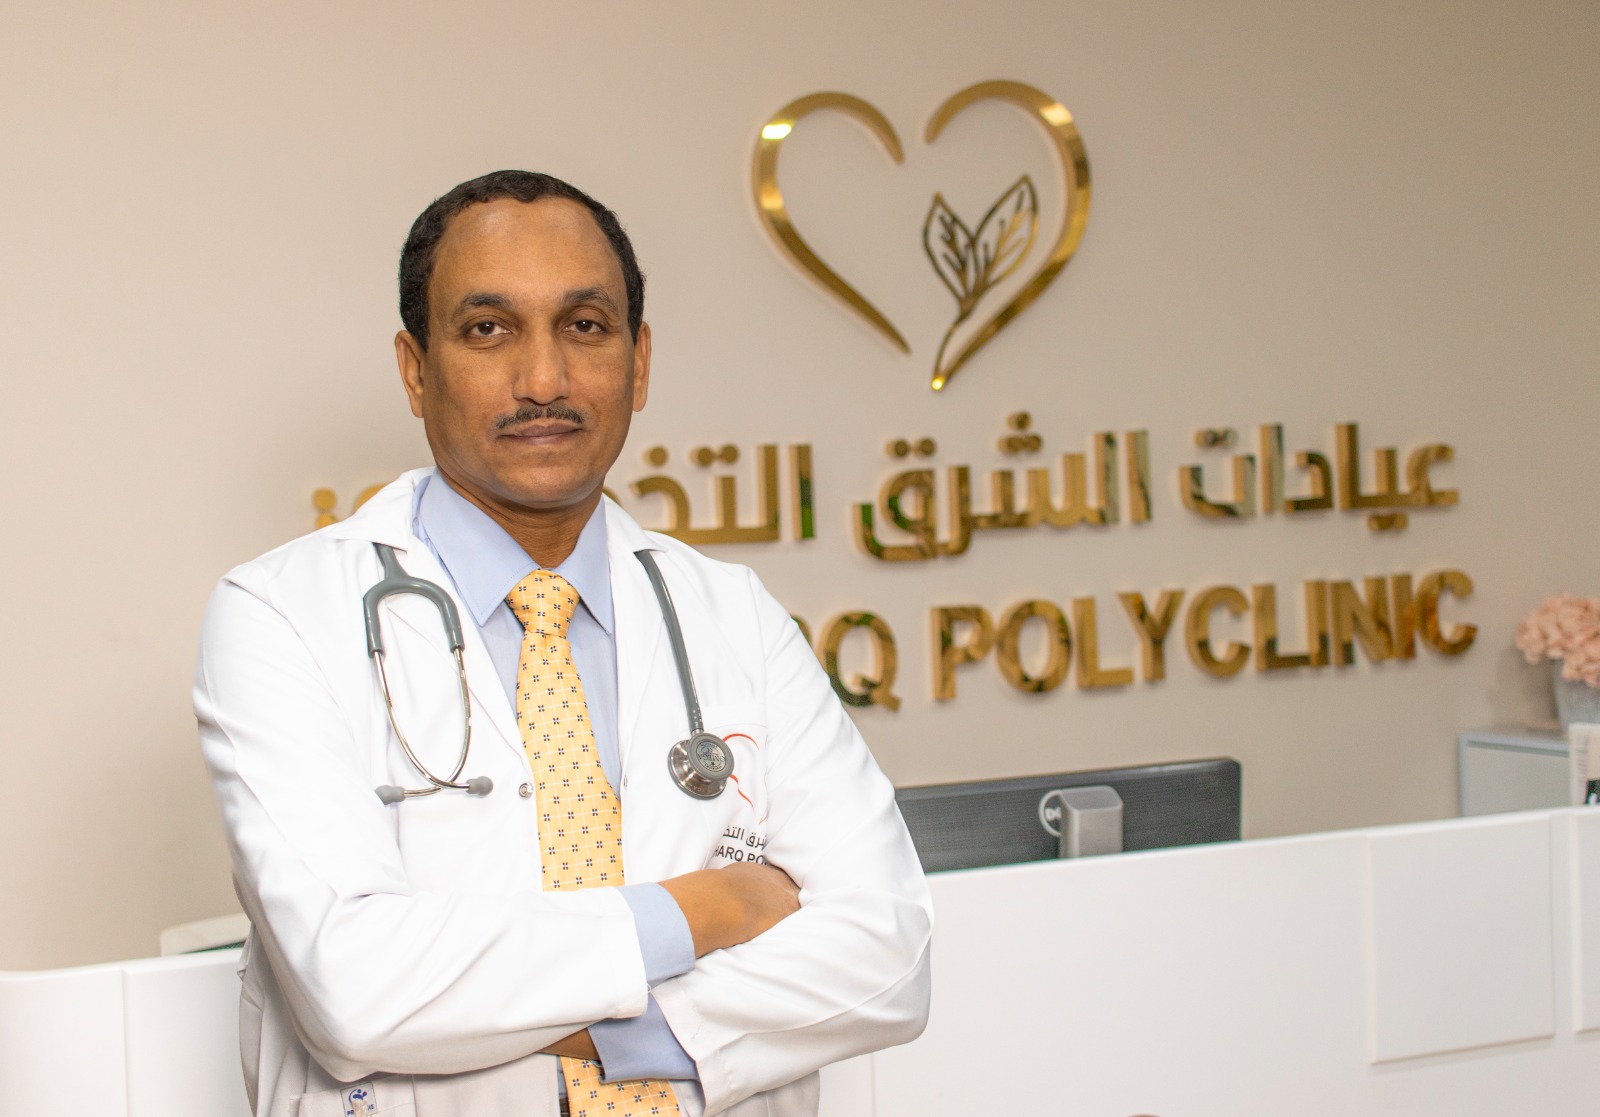 Dr. Hamdy Mahmoud